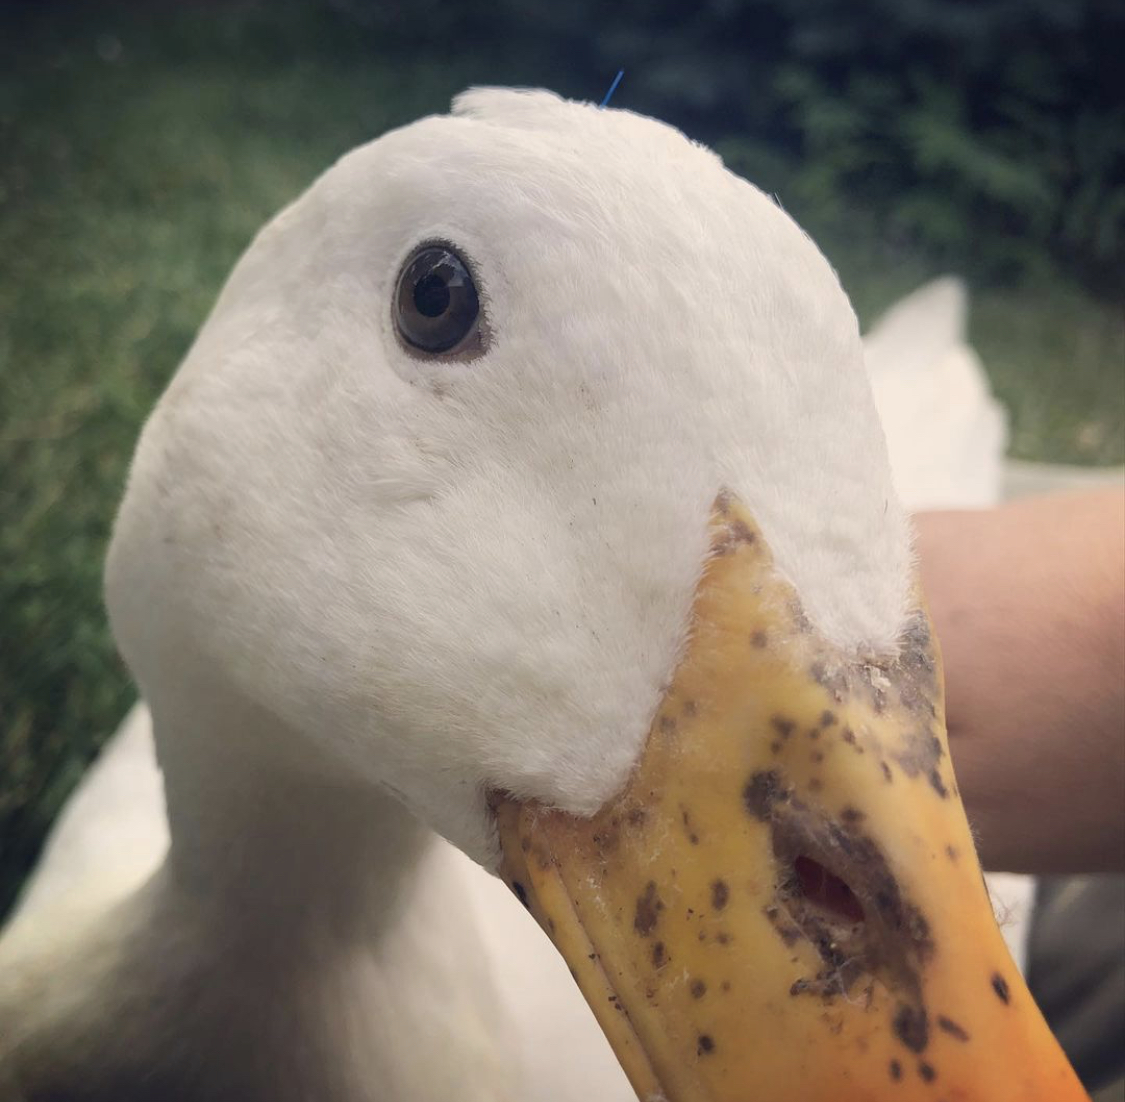 Effie the one-eyed duck